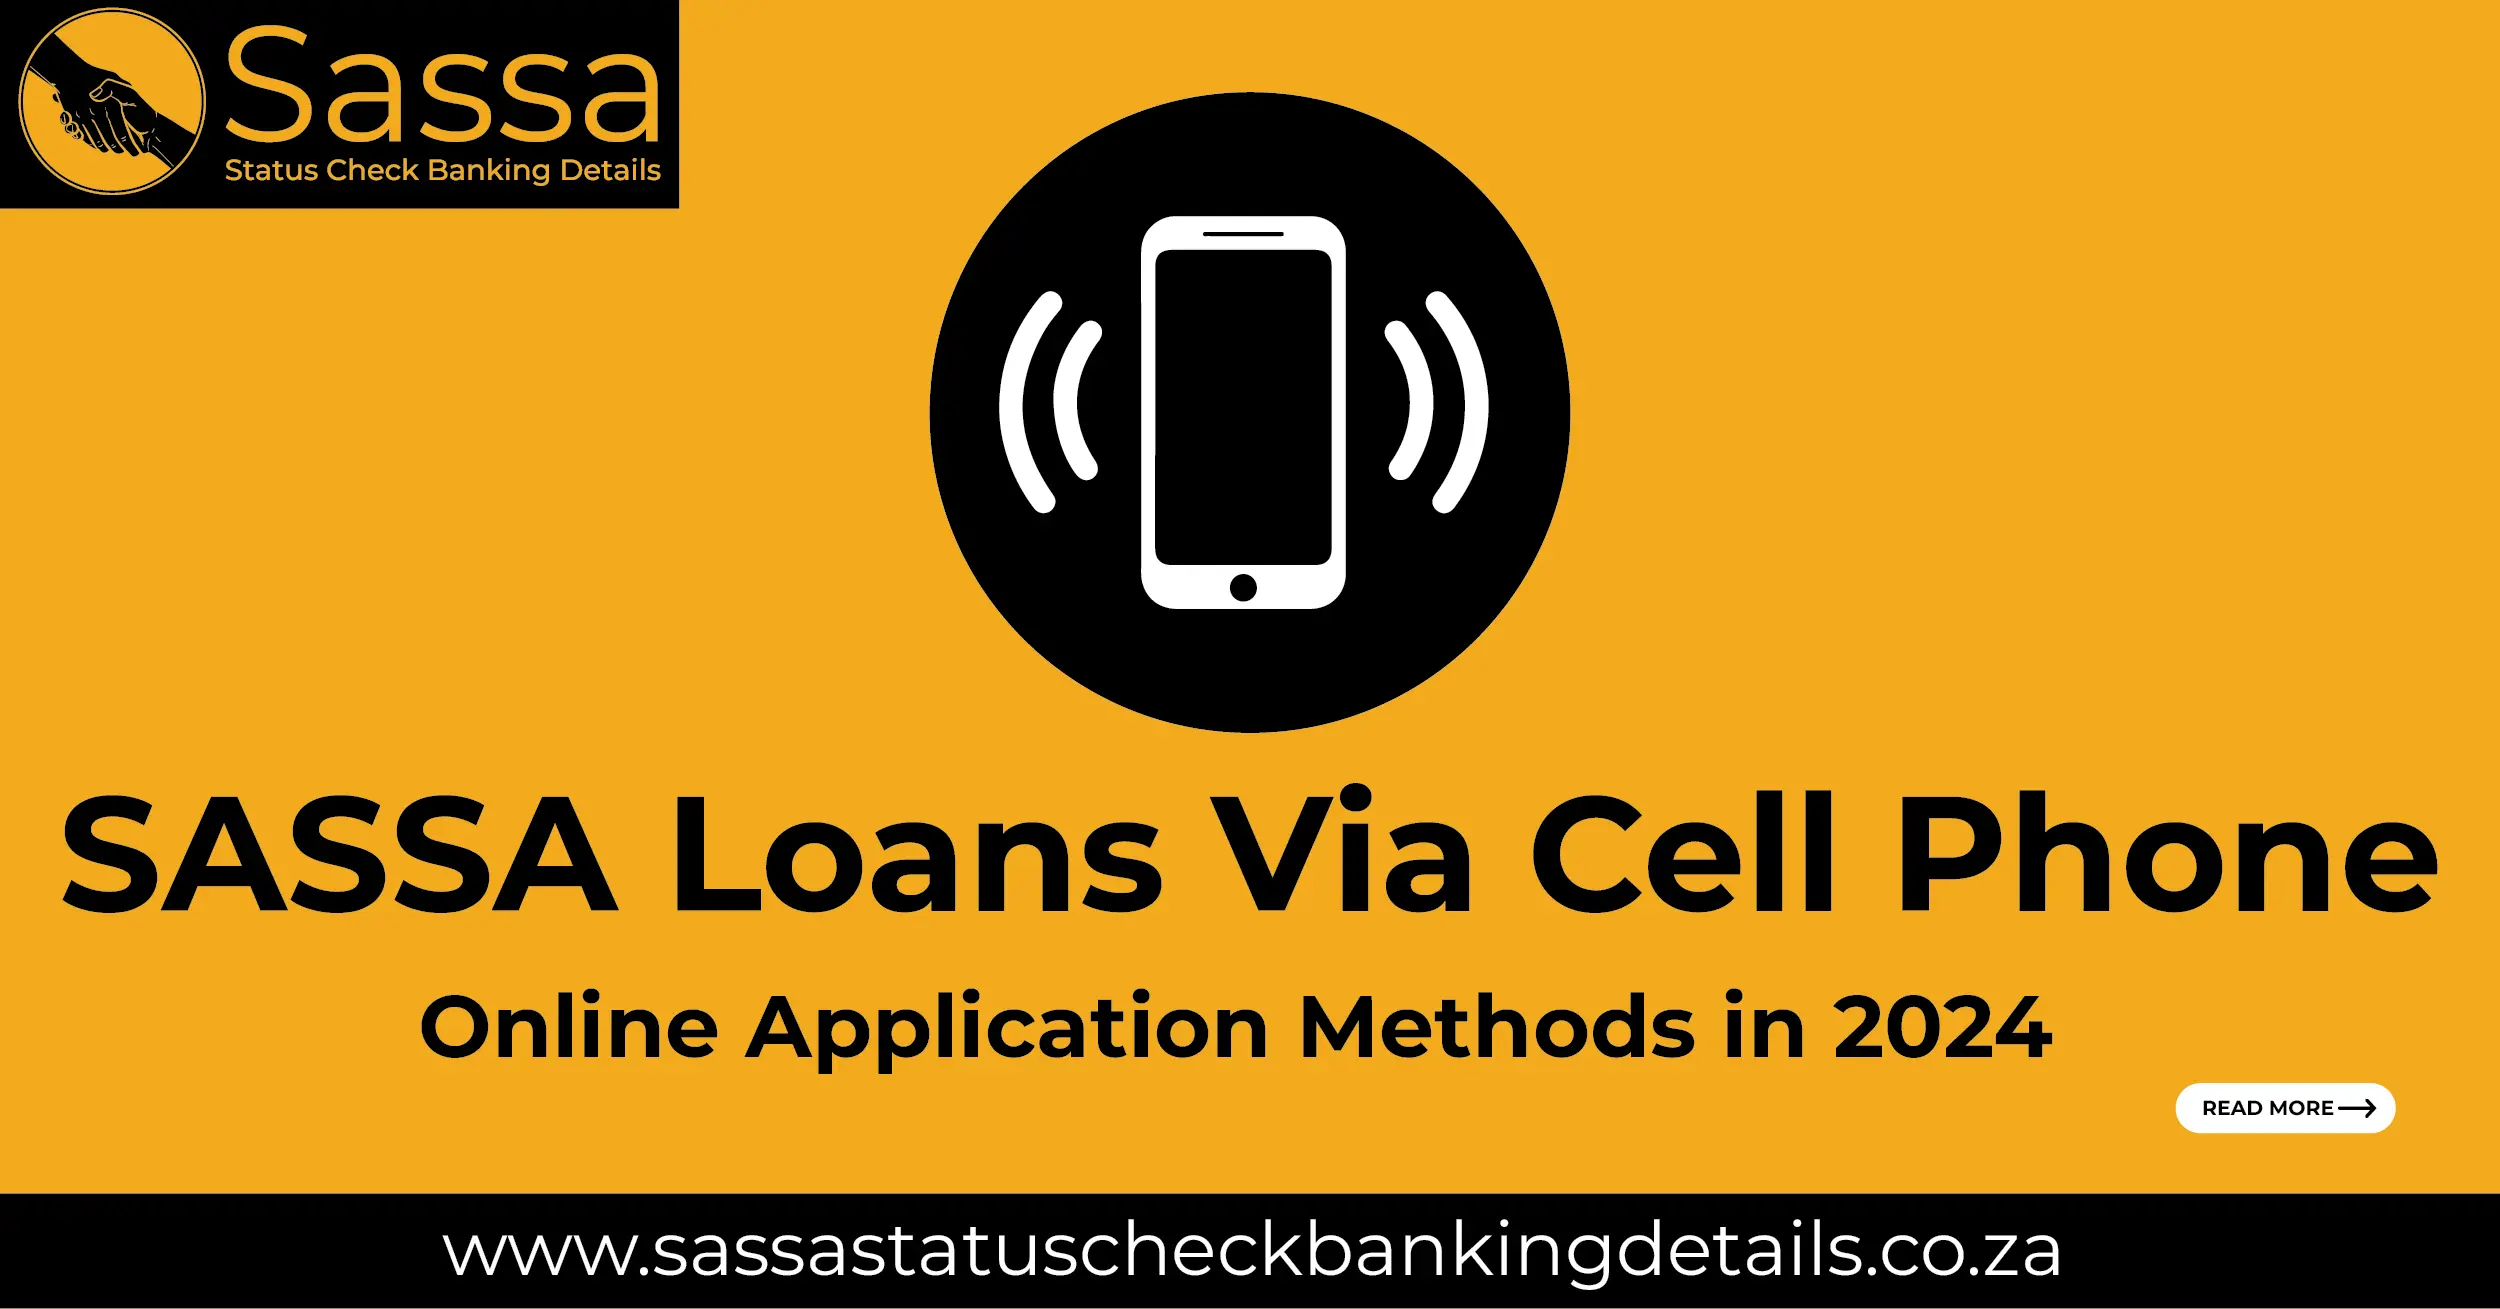 SASSA Loans Via Cell Phone: Online Application Methods in 2024